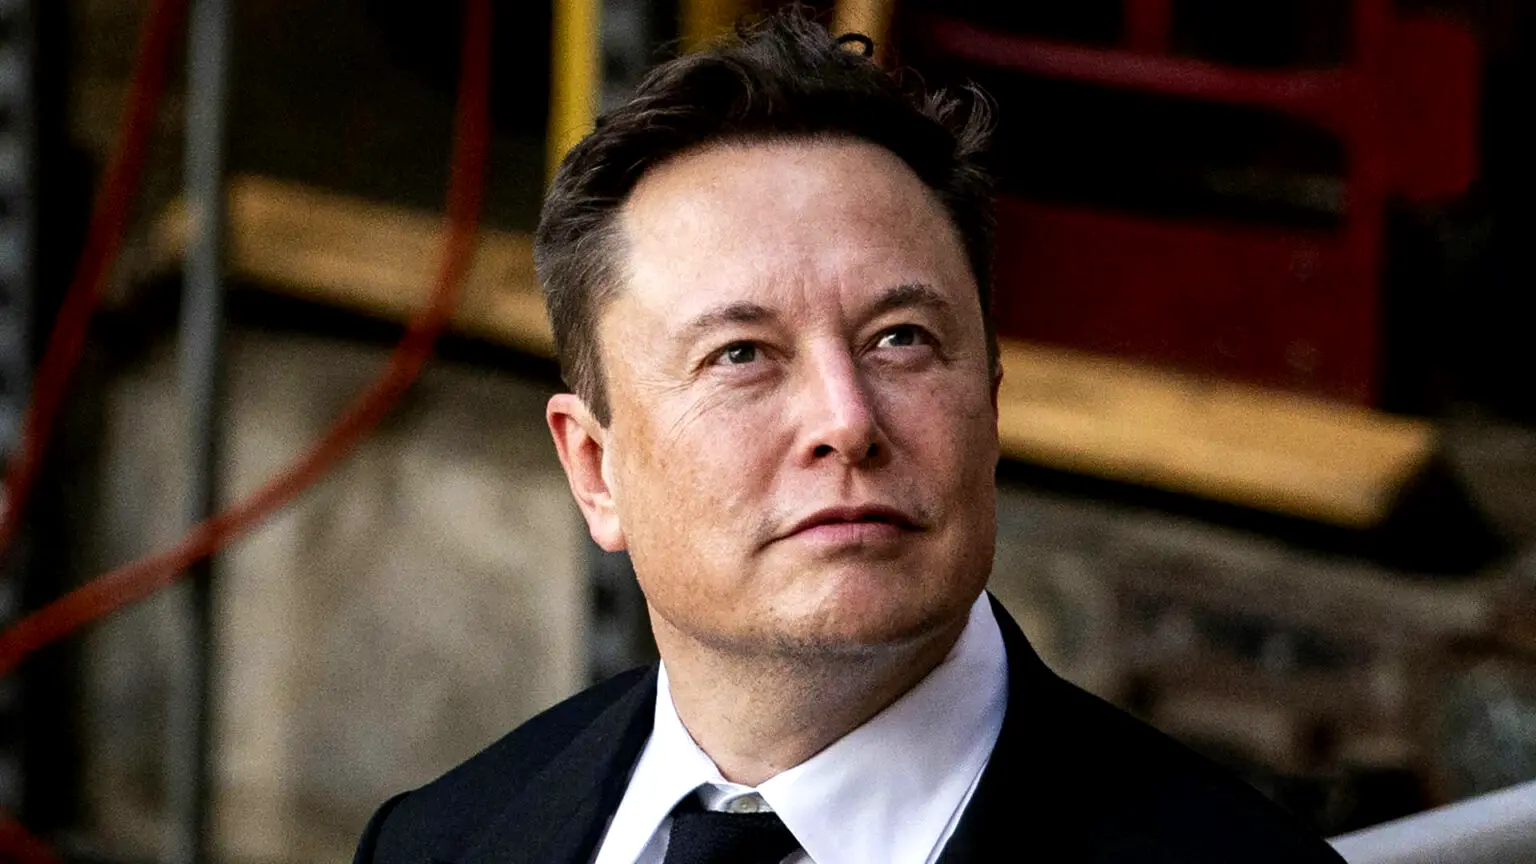 Twitter users back Elon Musk’s CEO resignation